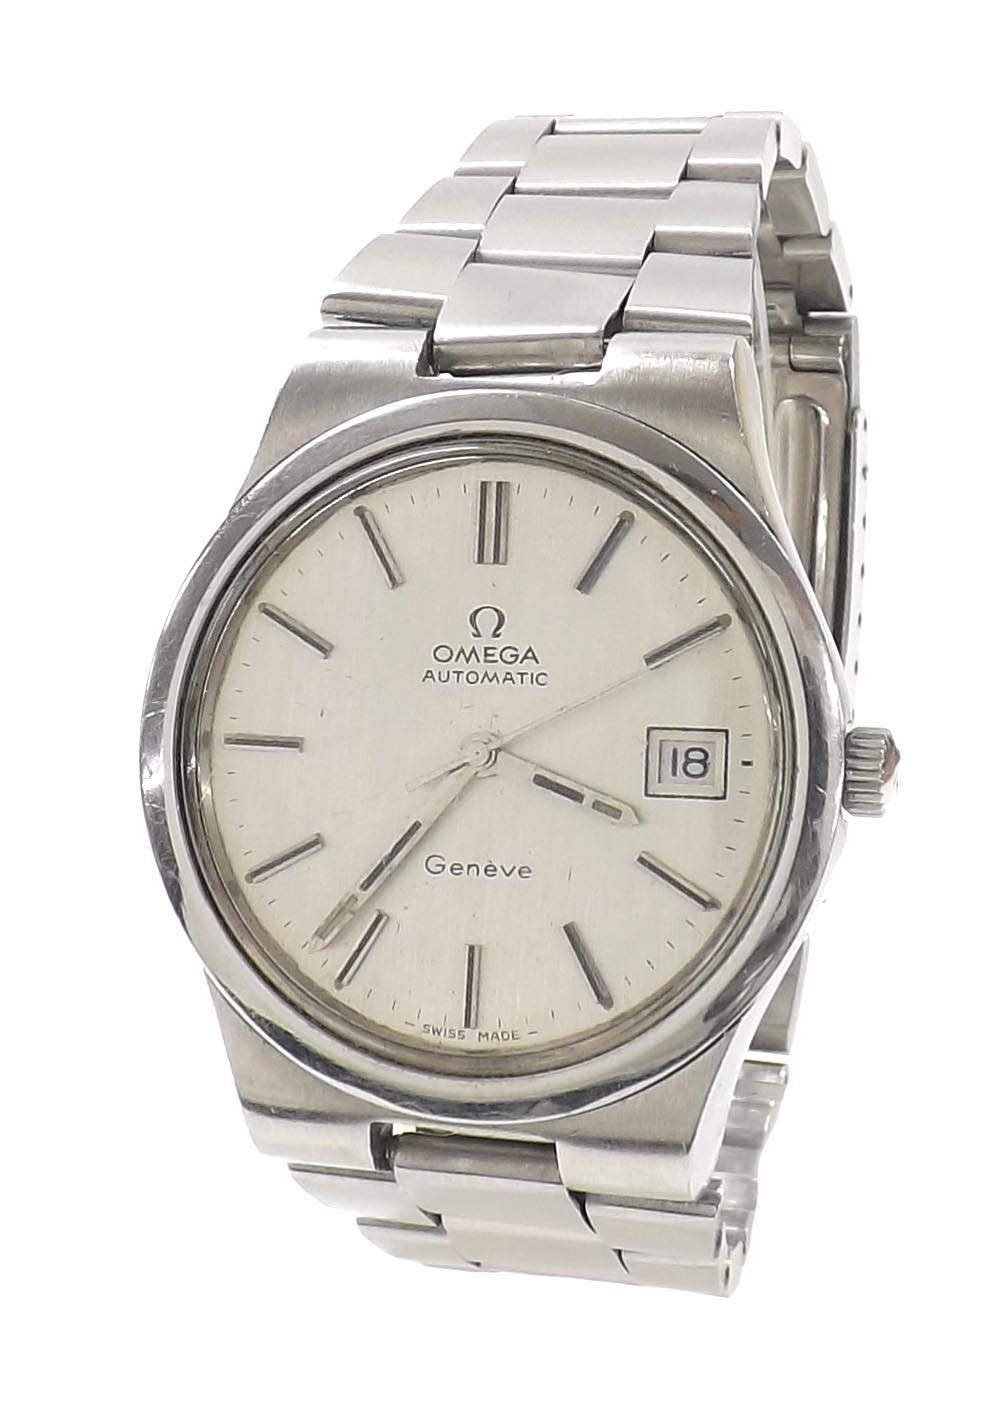 Omega Geneve automatic stainless steel gentleman's bracelet watch, circa 1973, ref. 1660173 3660832,